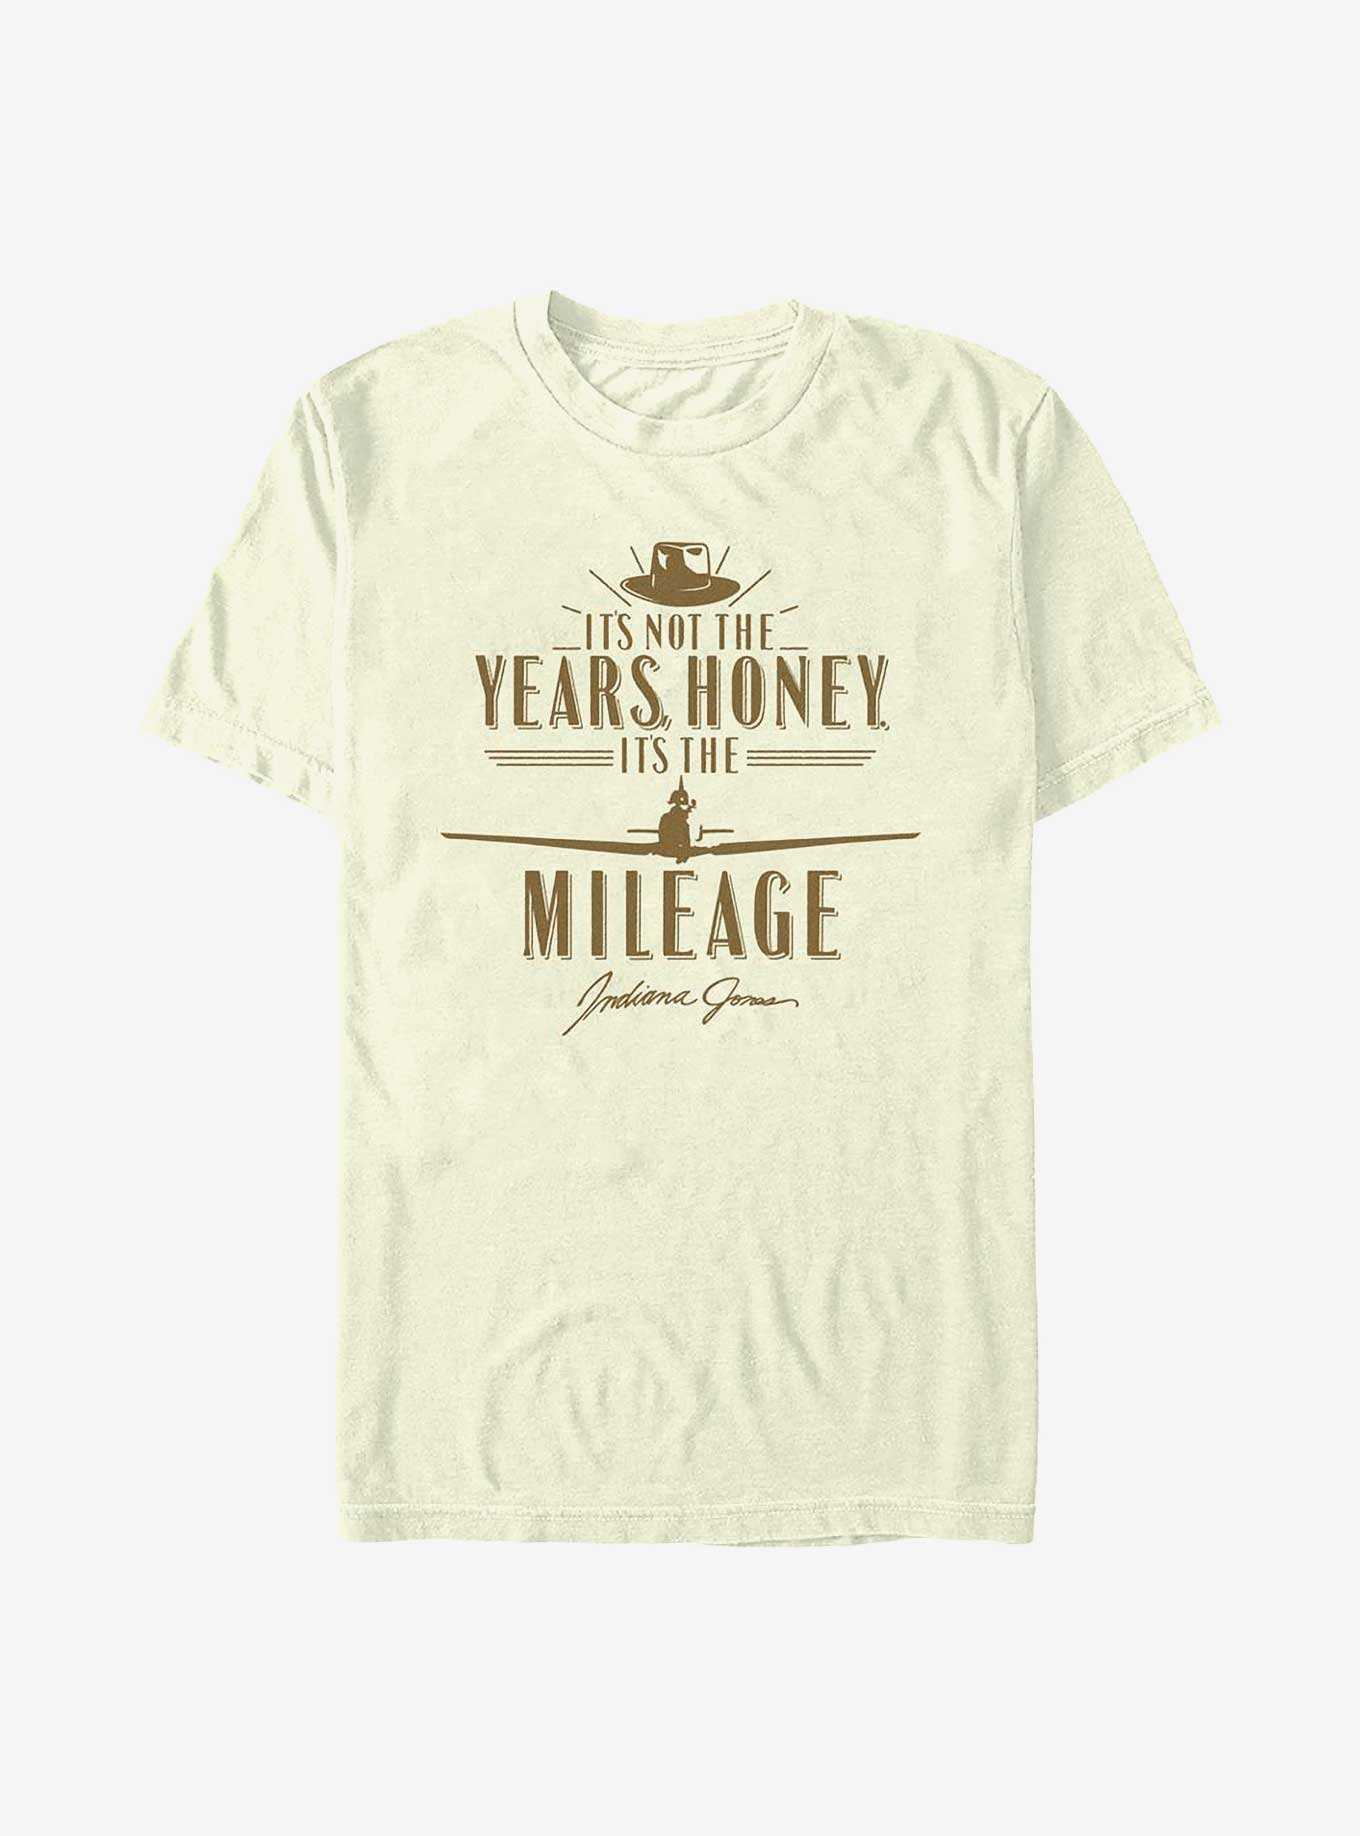 Indiana Jones It's The Mileage T-Shirt, , hi-res